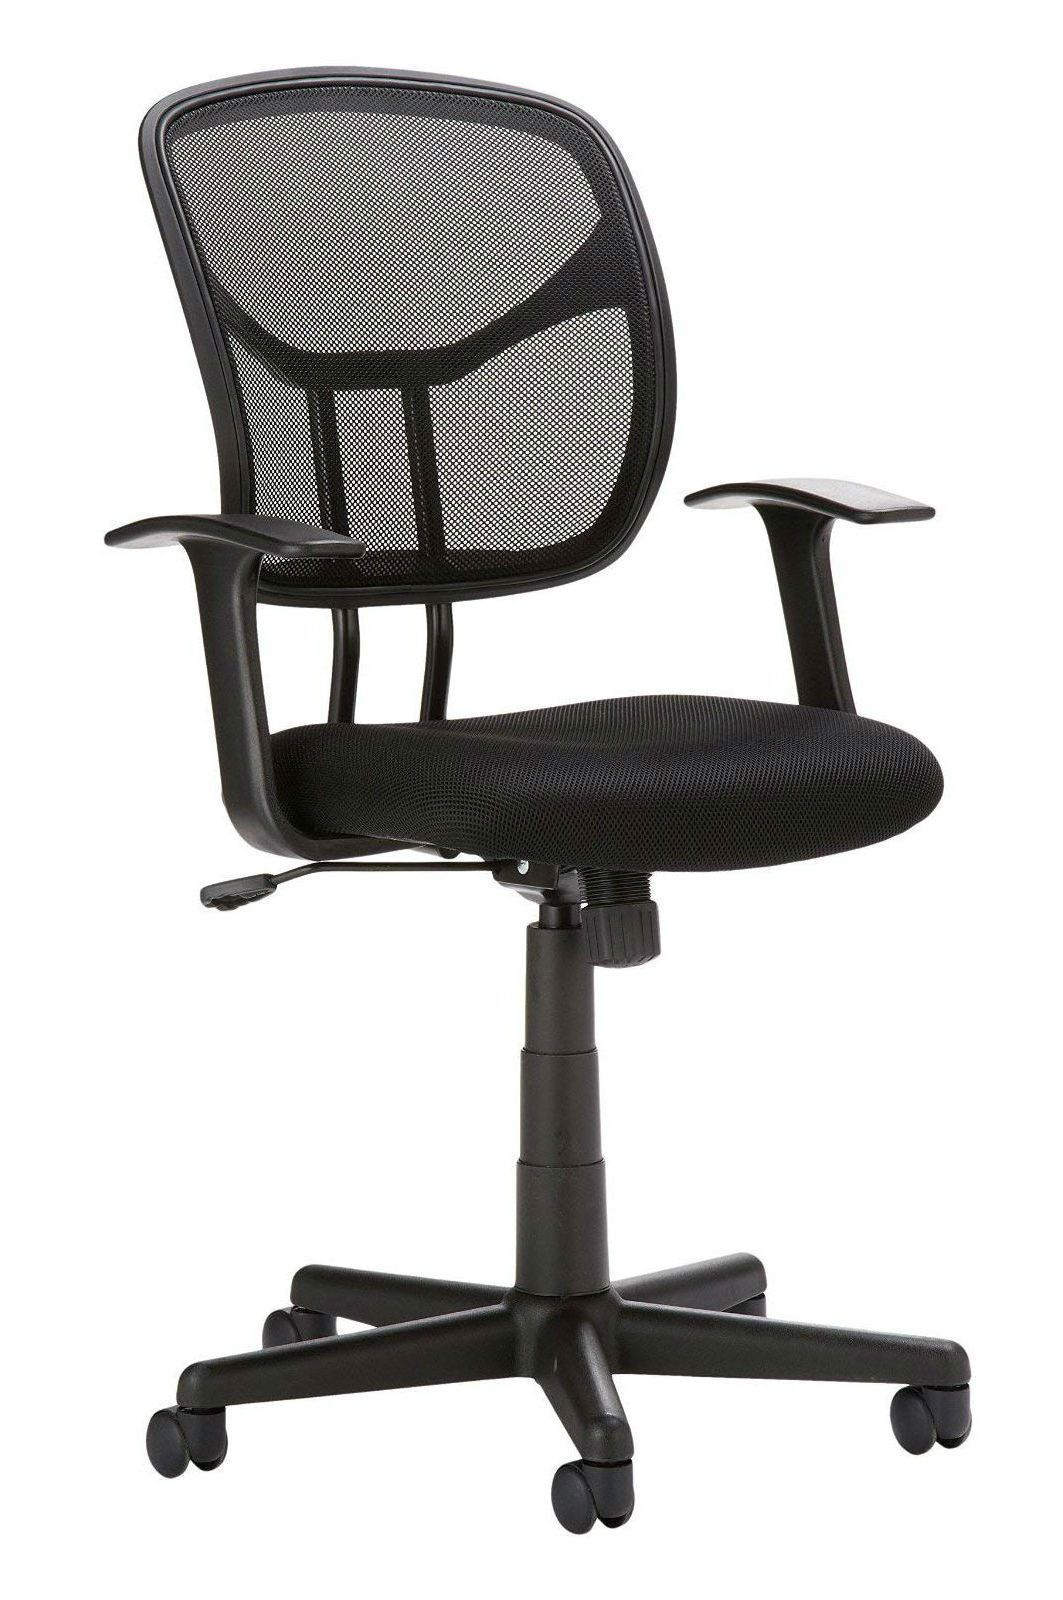 AmazonBasics Mid-Back Black Mesh Chair